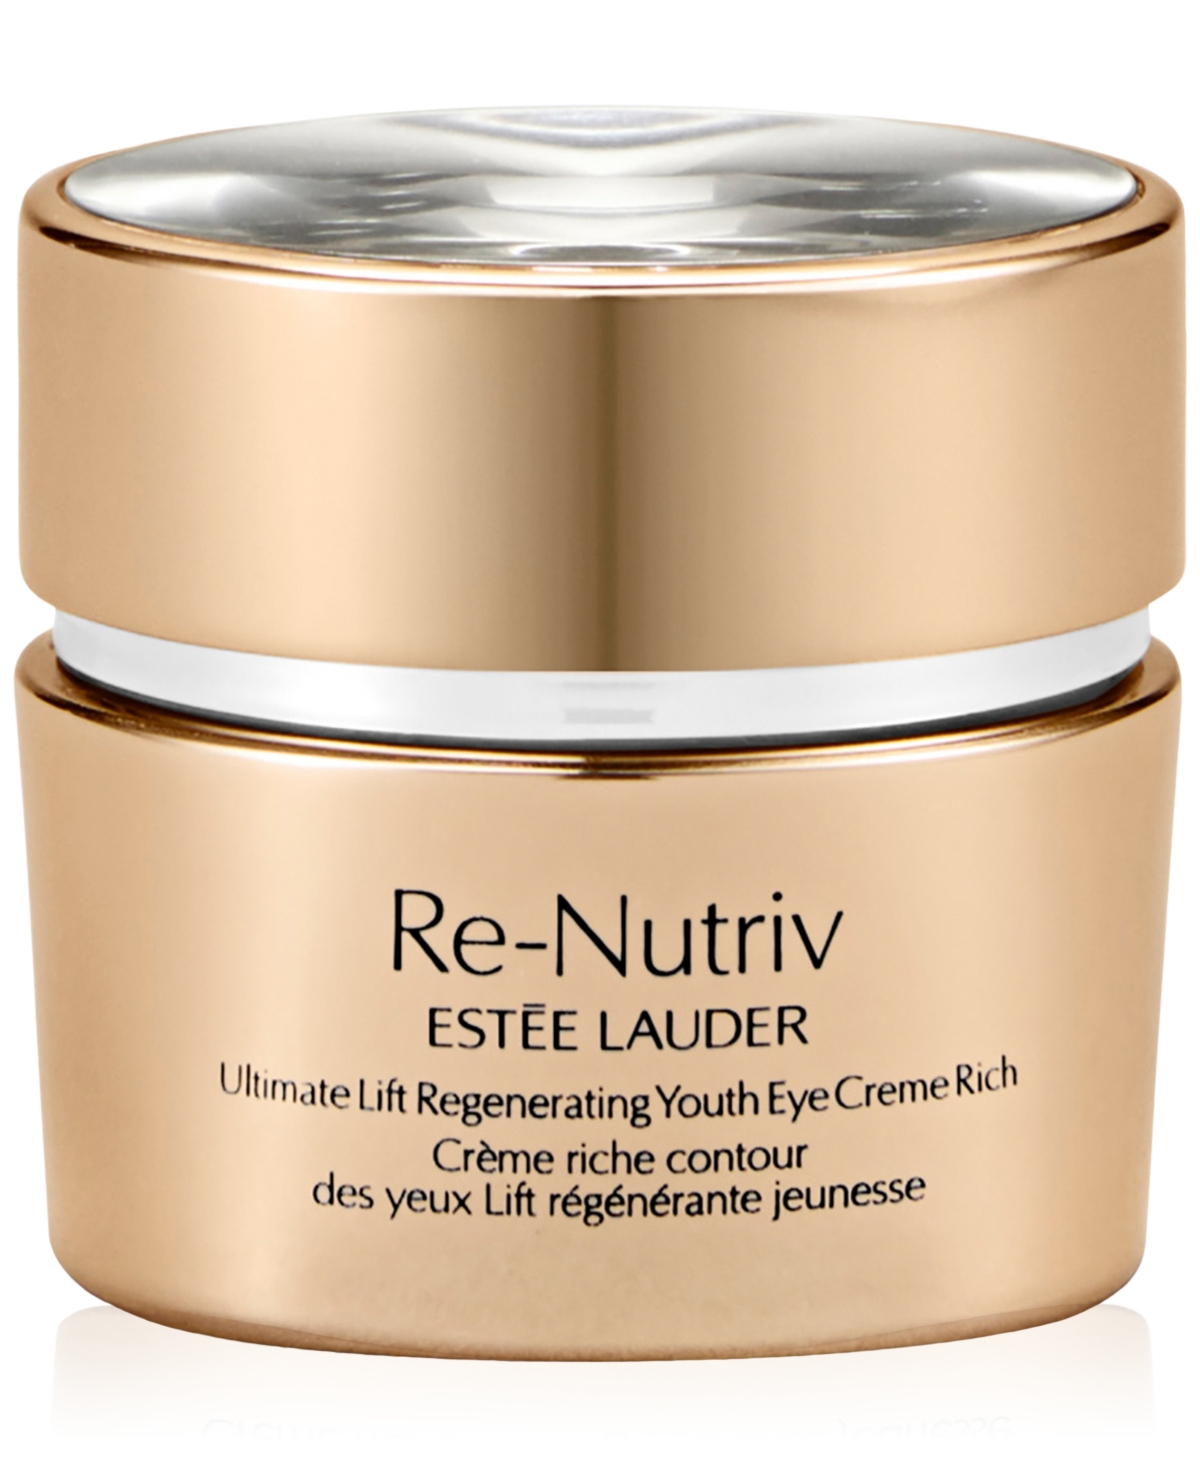 Estée Lauder Re-nutriv Ultimate Lift Regenerating Youth Eye Creme Rich, 0.5-oz. In No Color